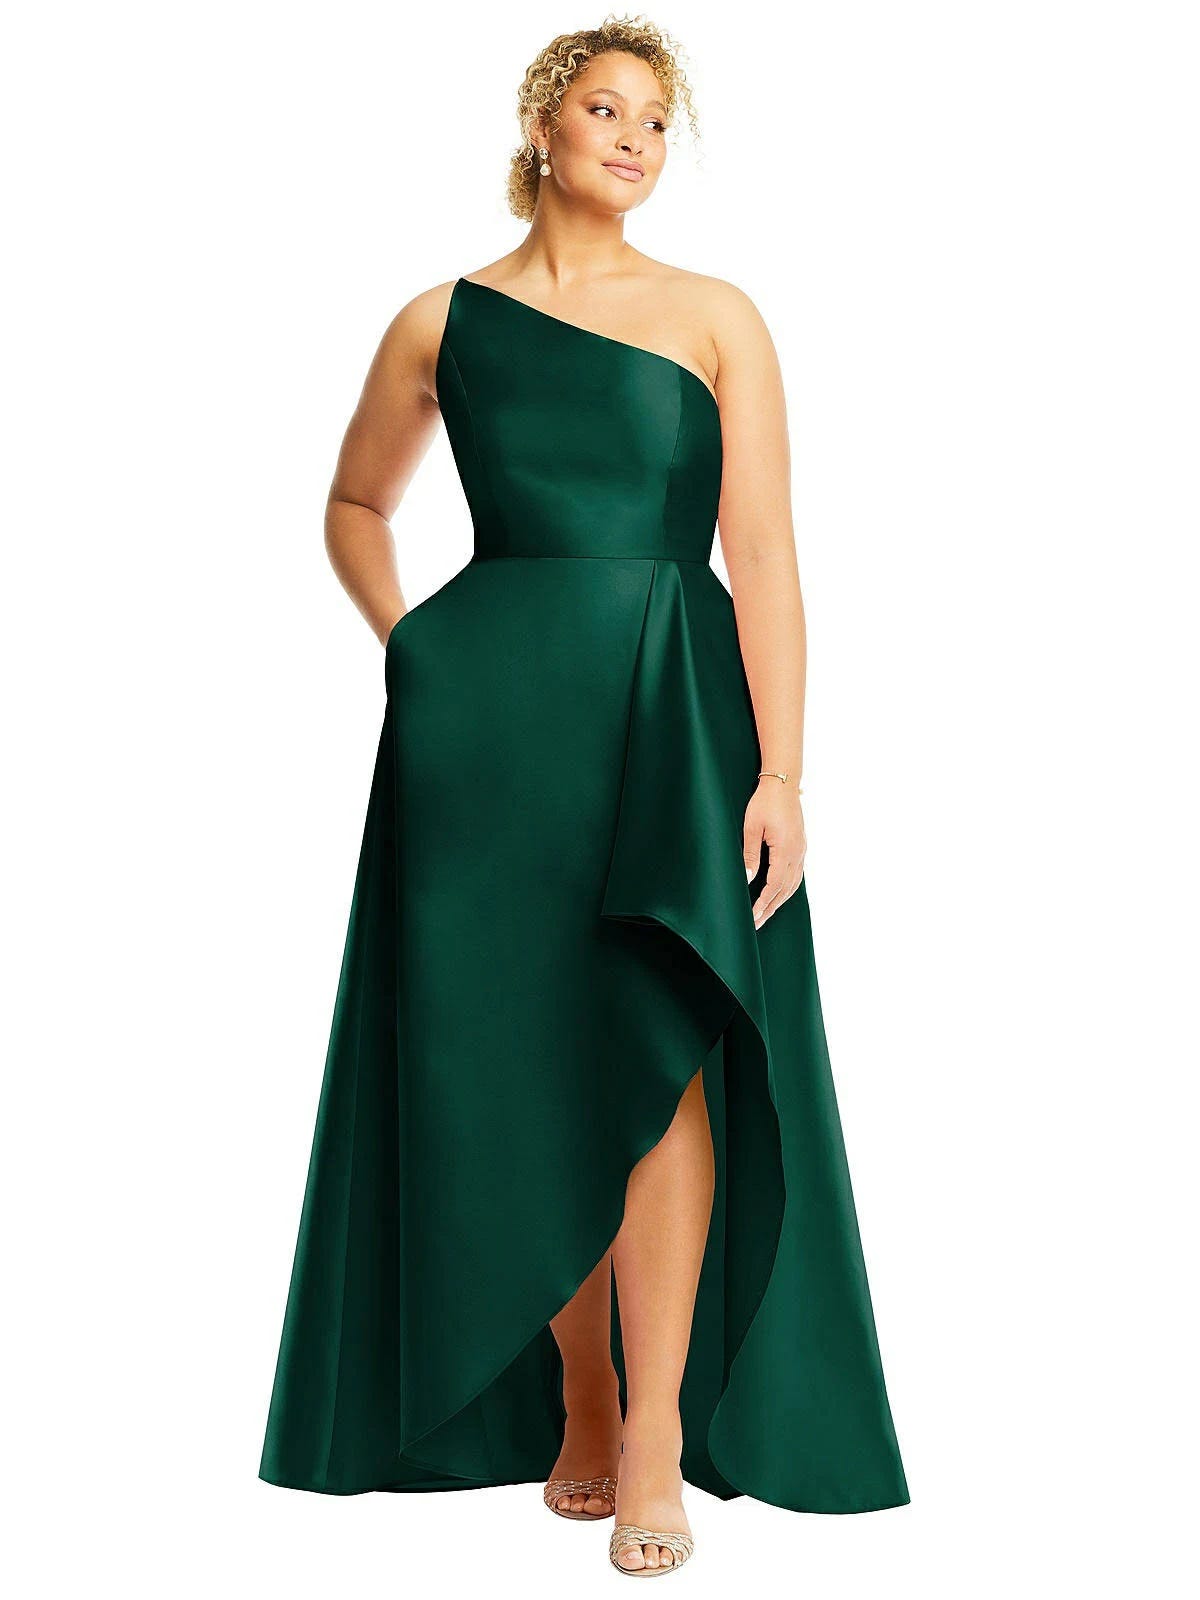 One-Shoulder Satin Gown for Formal Events | Image